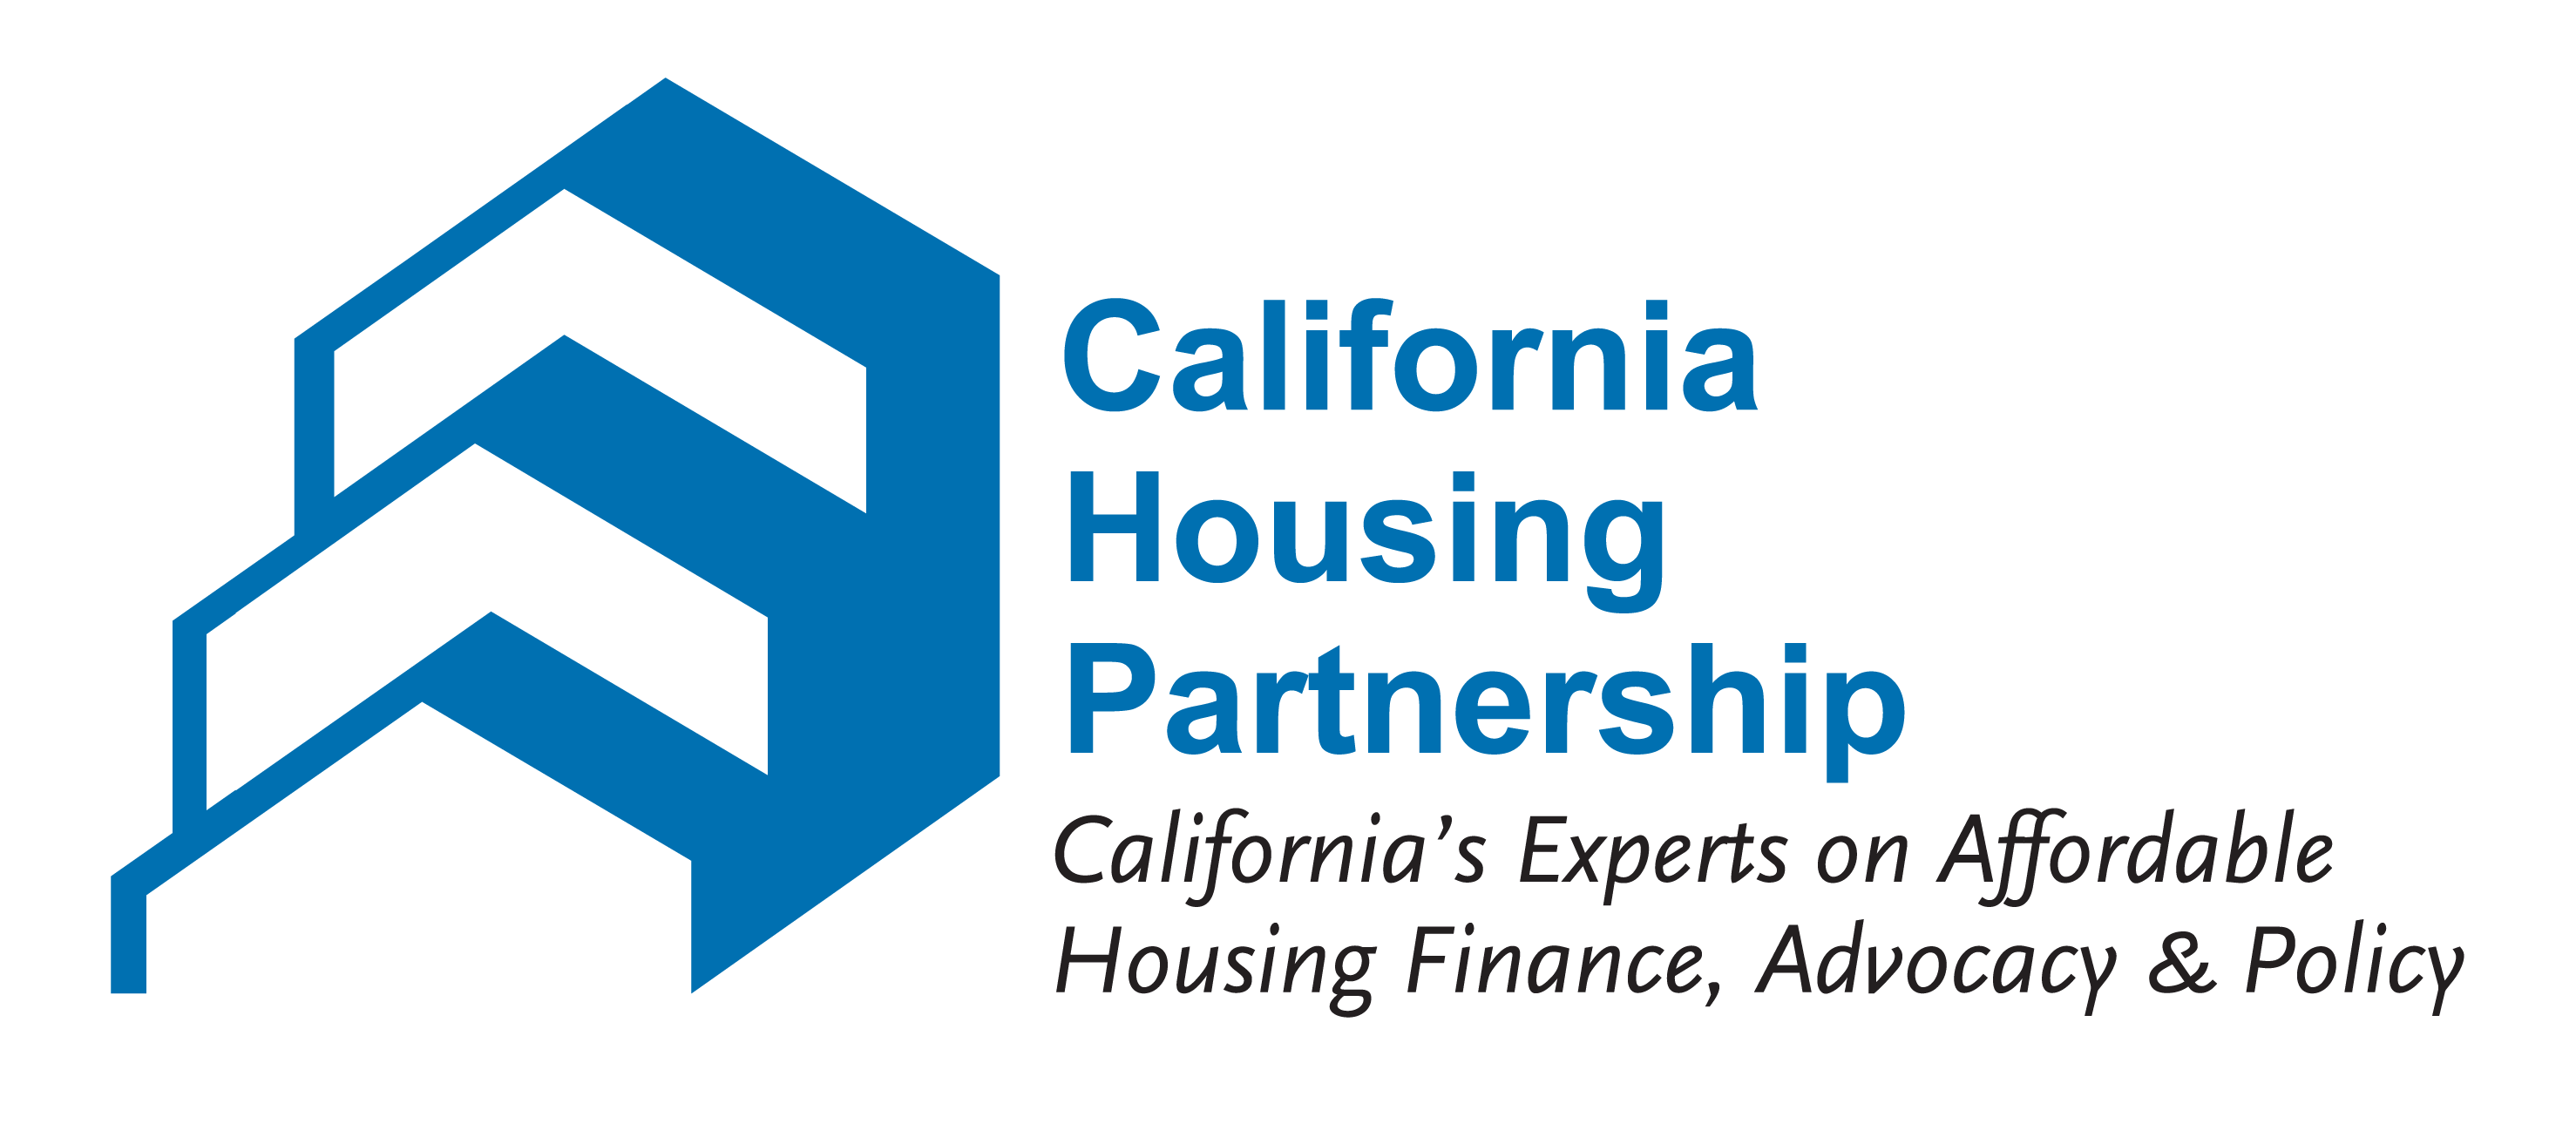 California Housing Partnership logo with tag